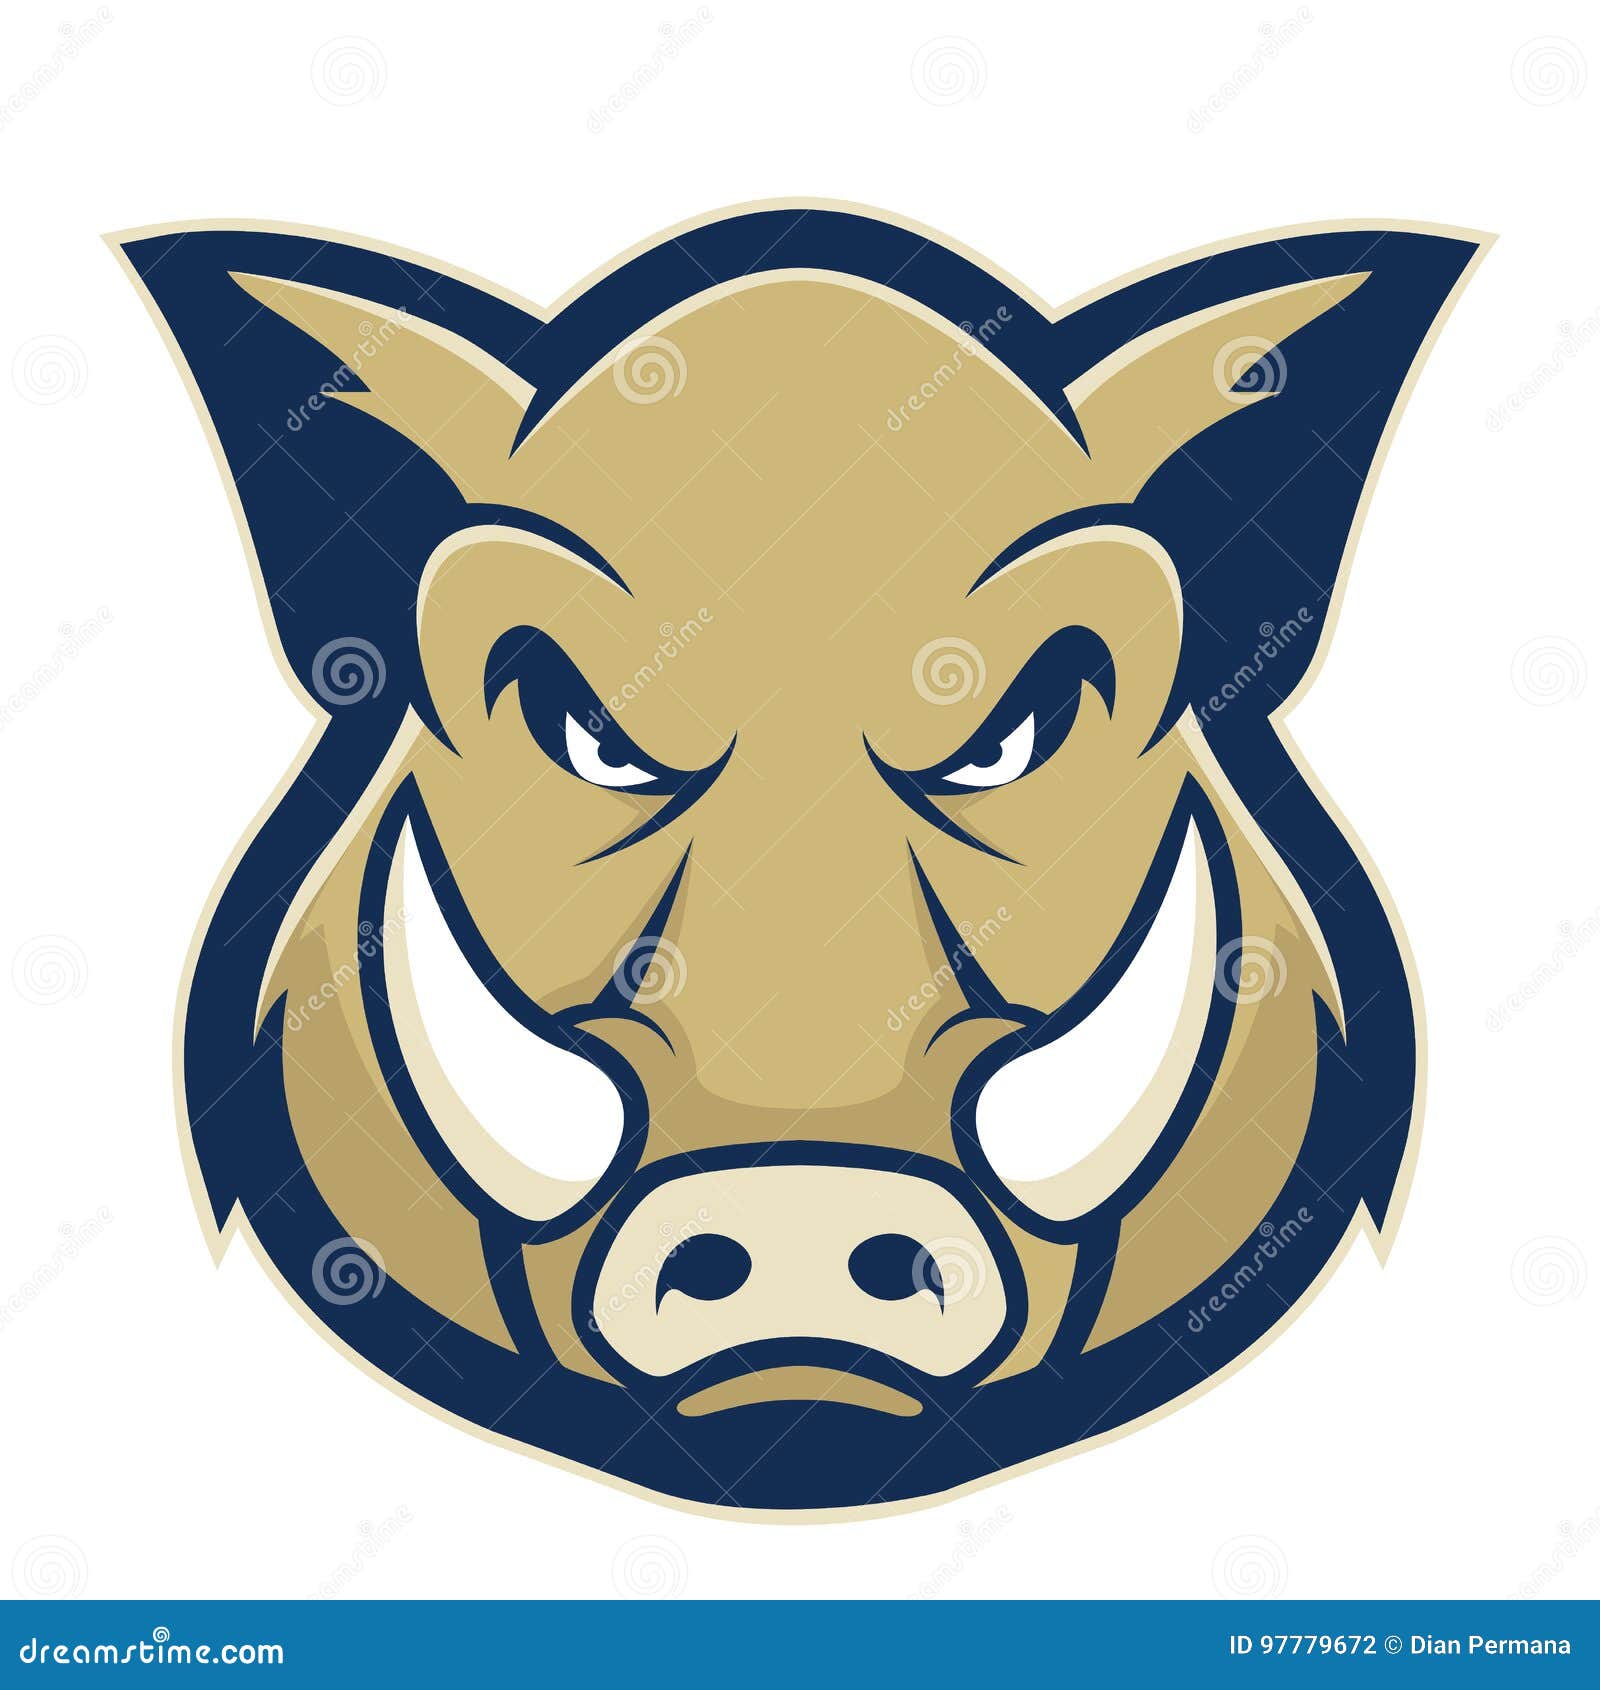 wild hog or boar head mascot